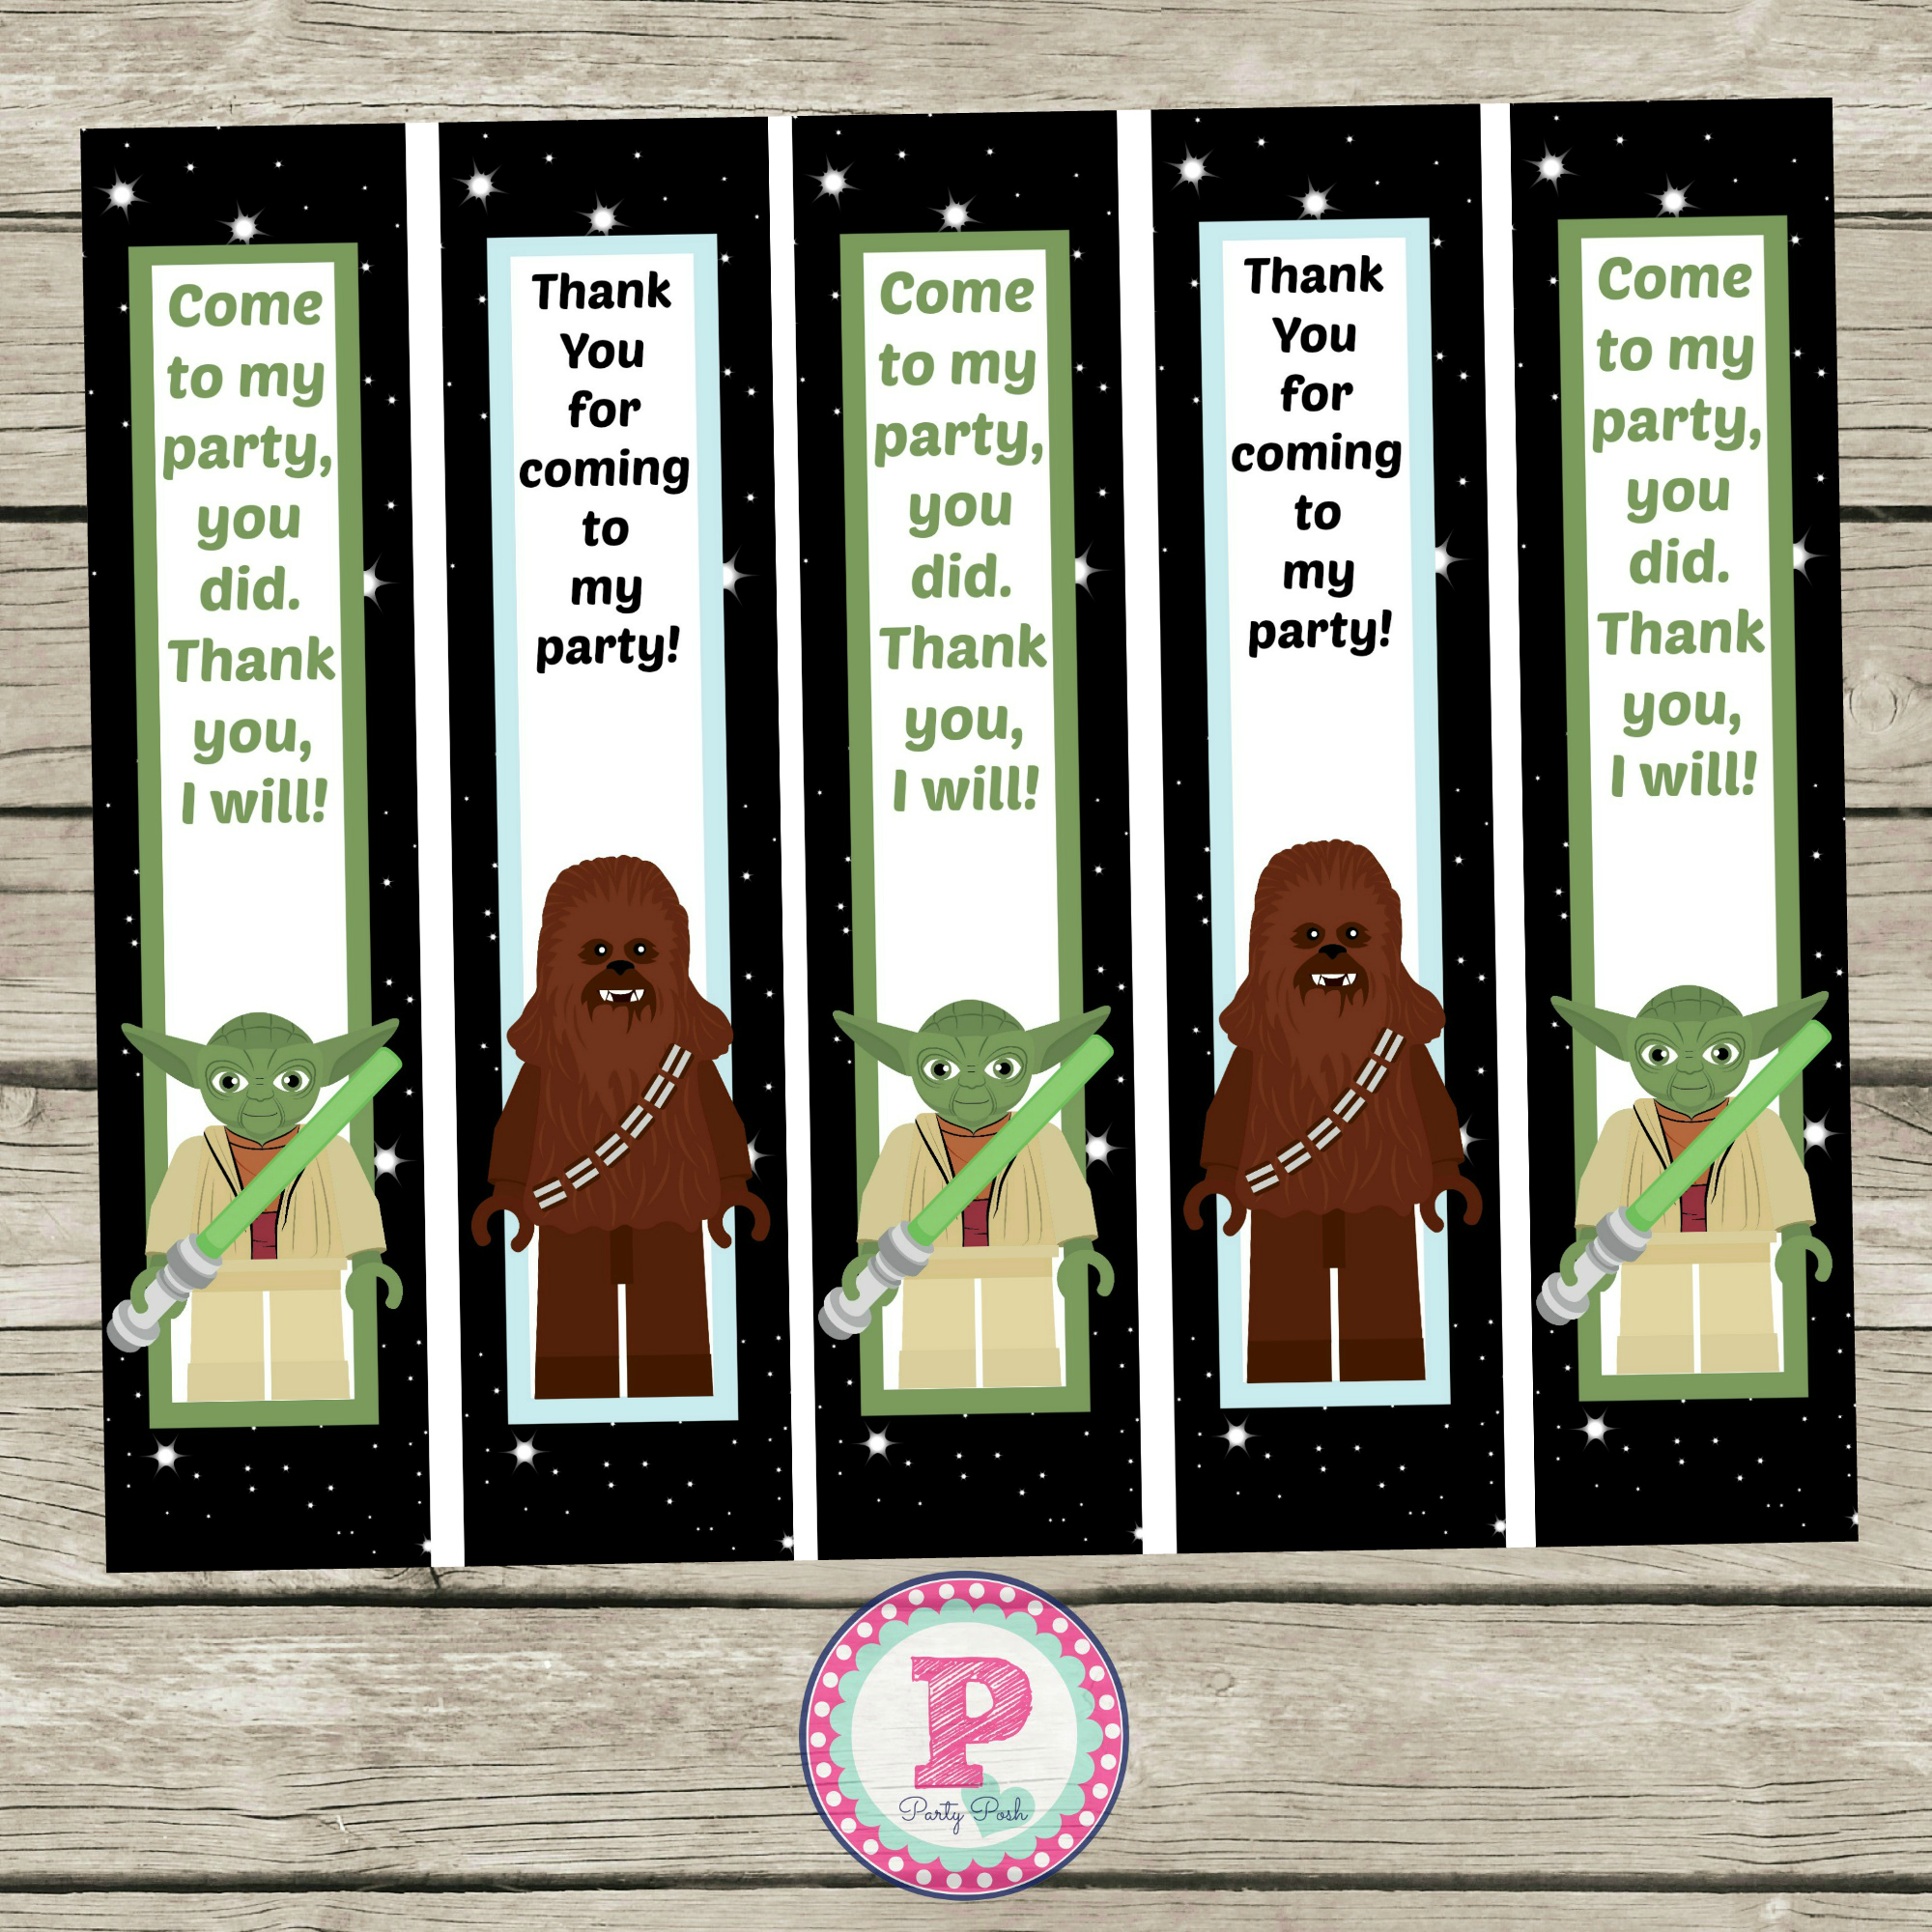 7 Best Images of Star Wars Printable Bookmarks - Star Wars Bookmarks ...